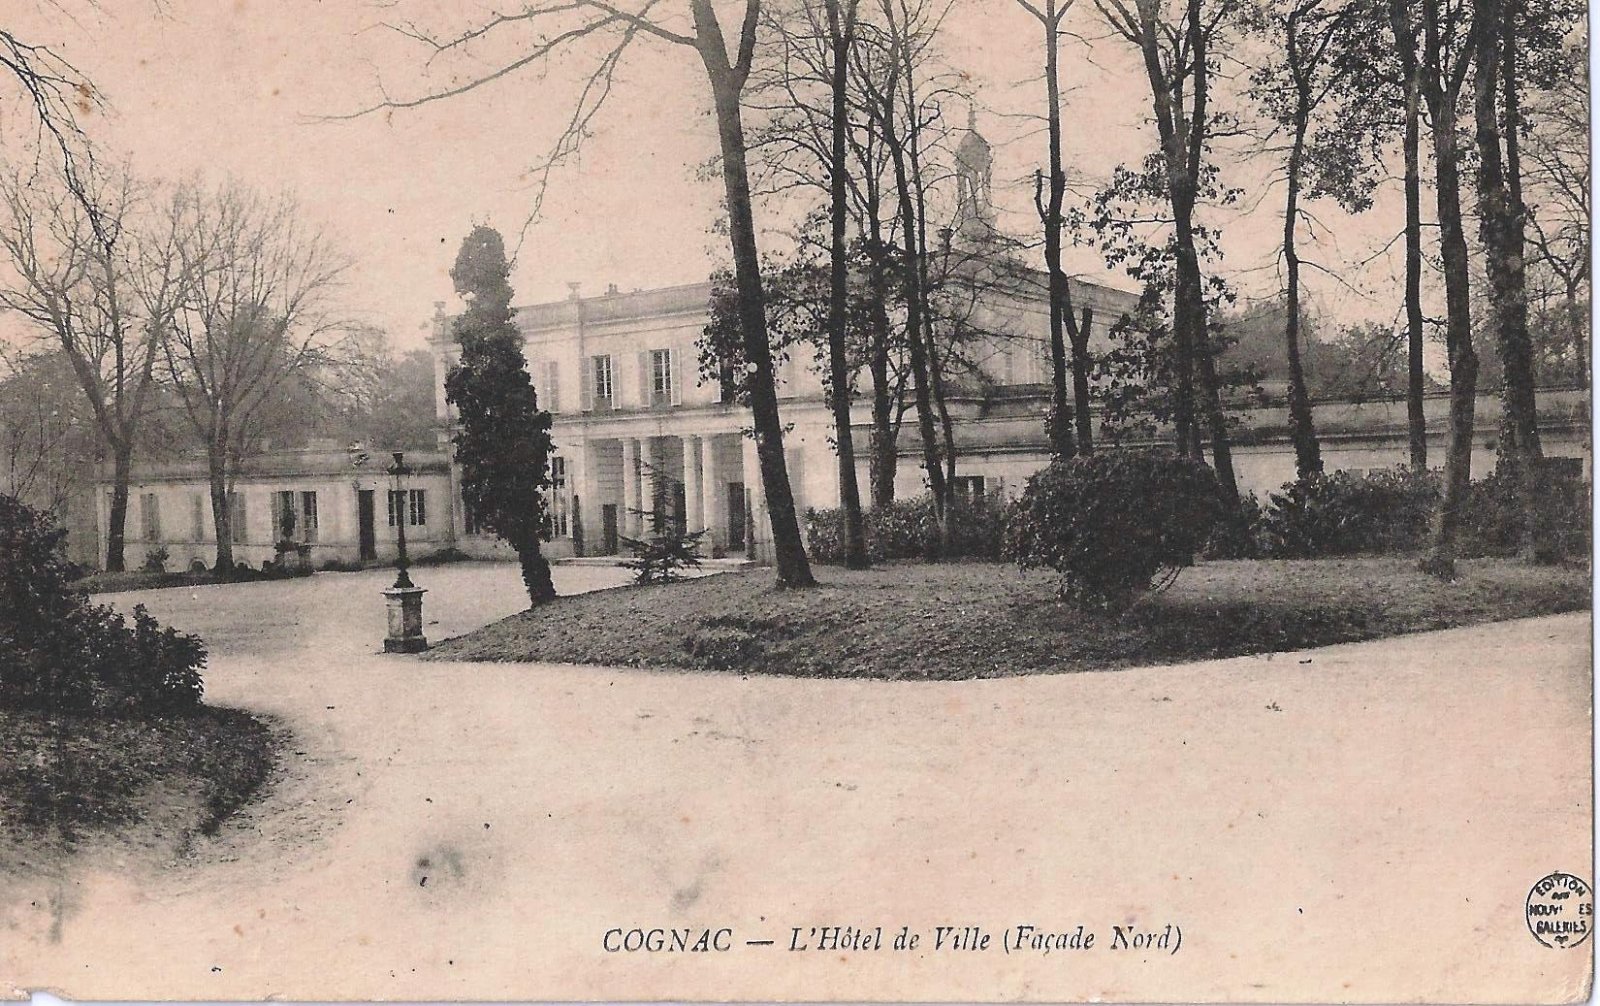 COGNAC HOTEL DE VILLE 1915